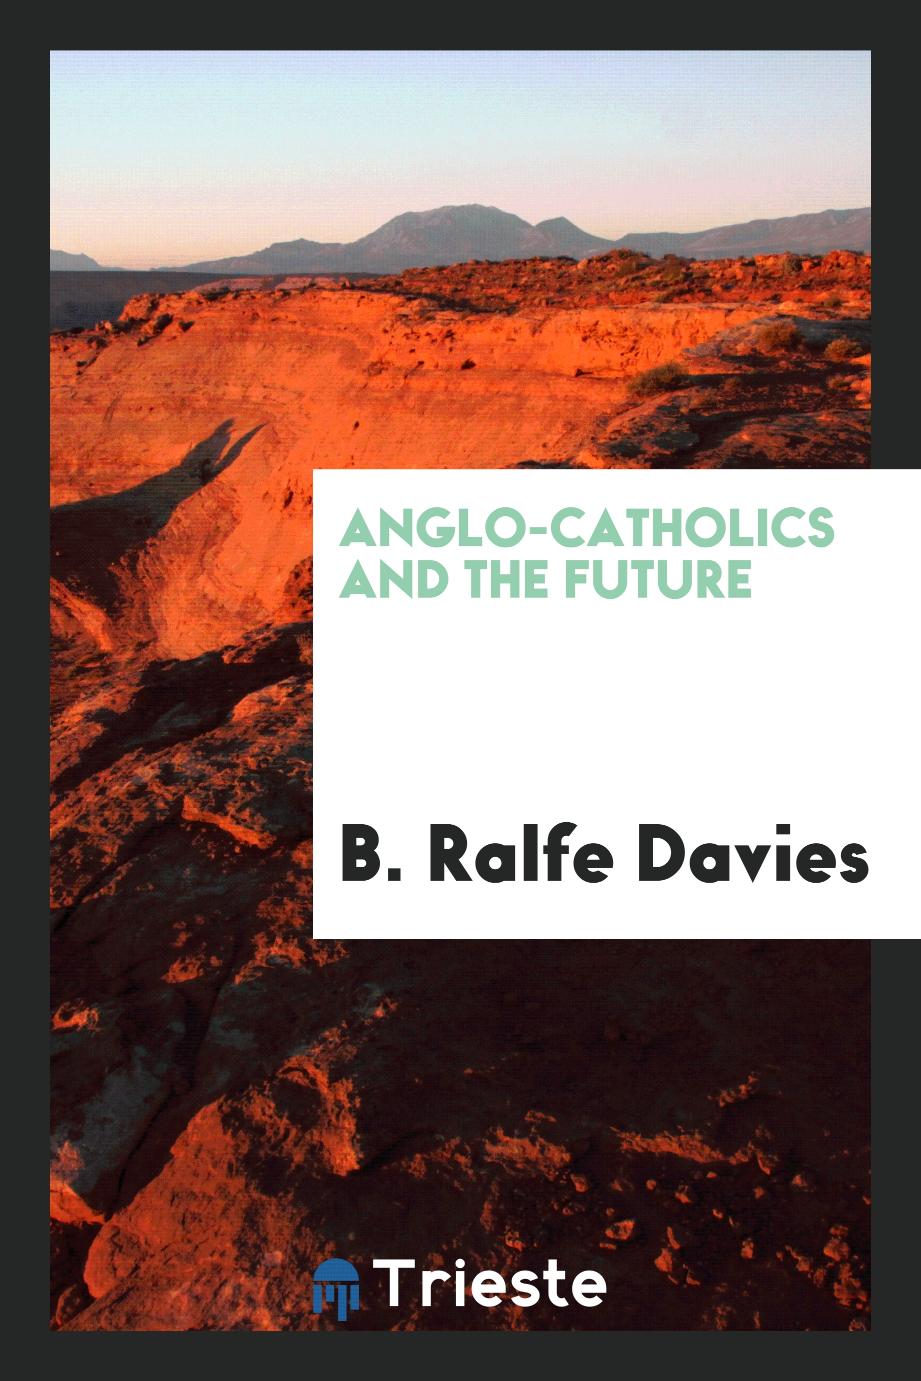 Anglo-Catholics and the future